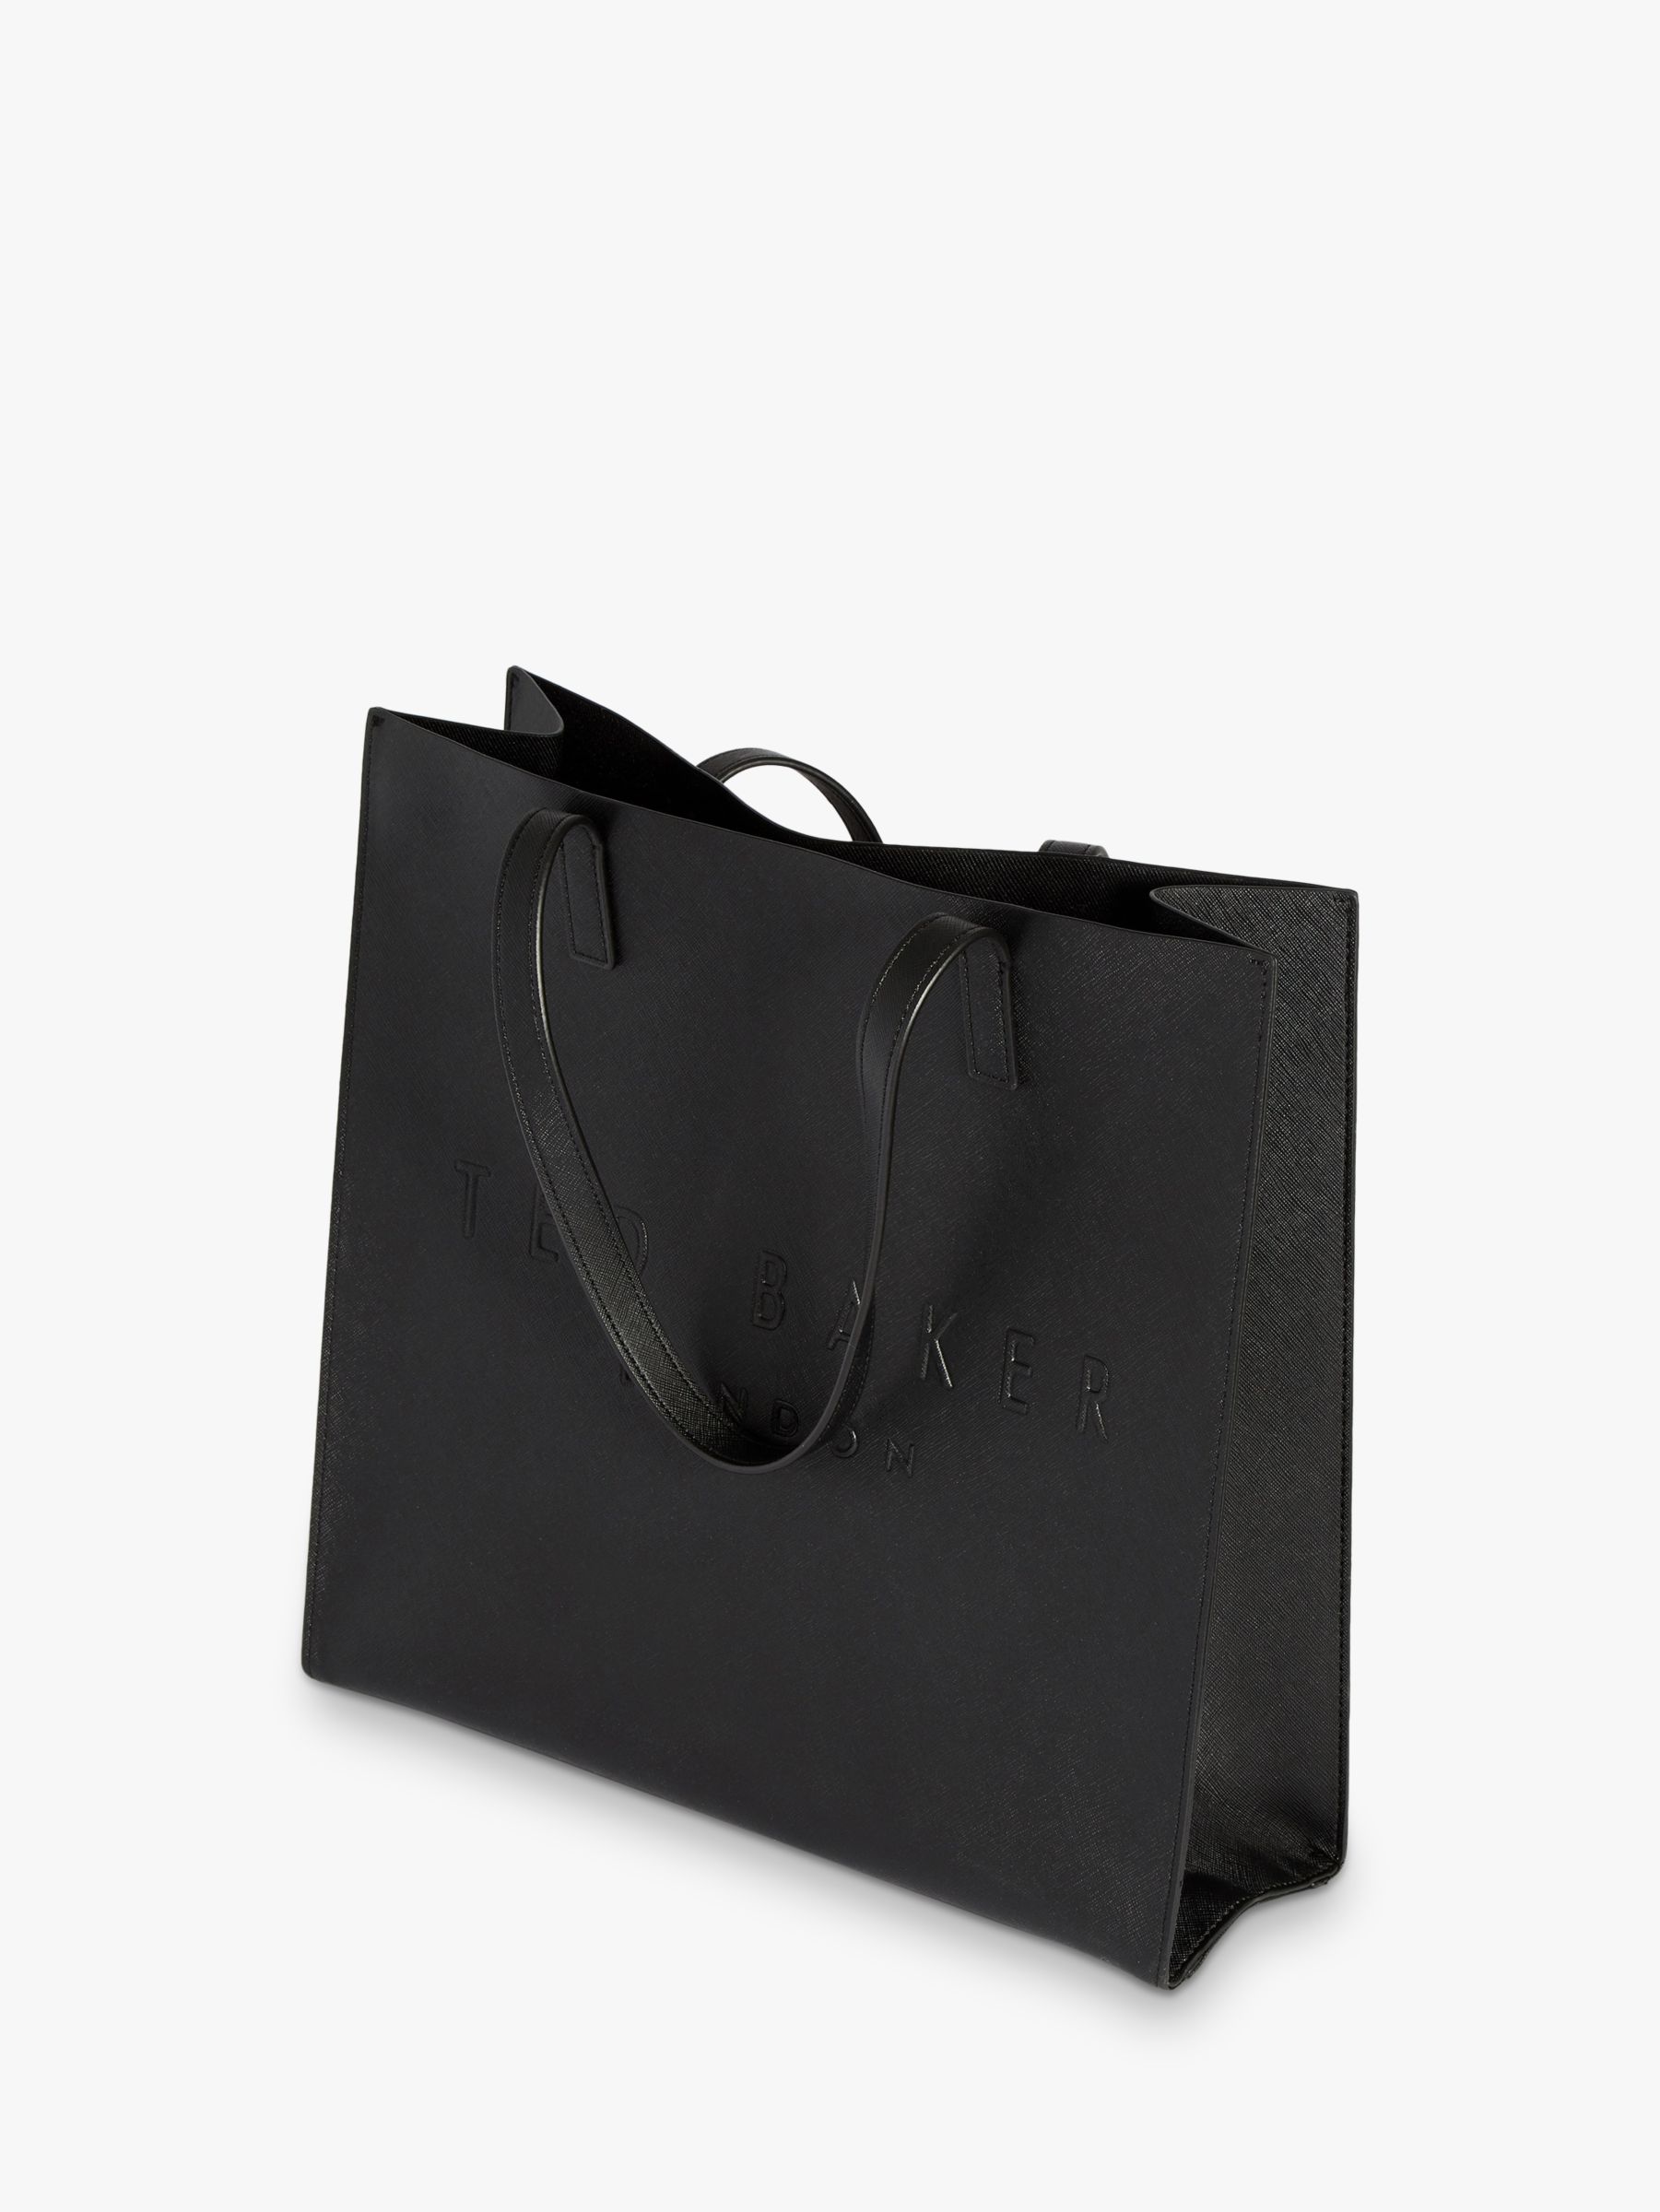 Ted Baker Soocon Large Icon Shopper Bag, Black at John Lewis & Partners